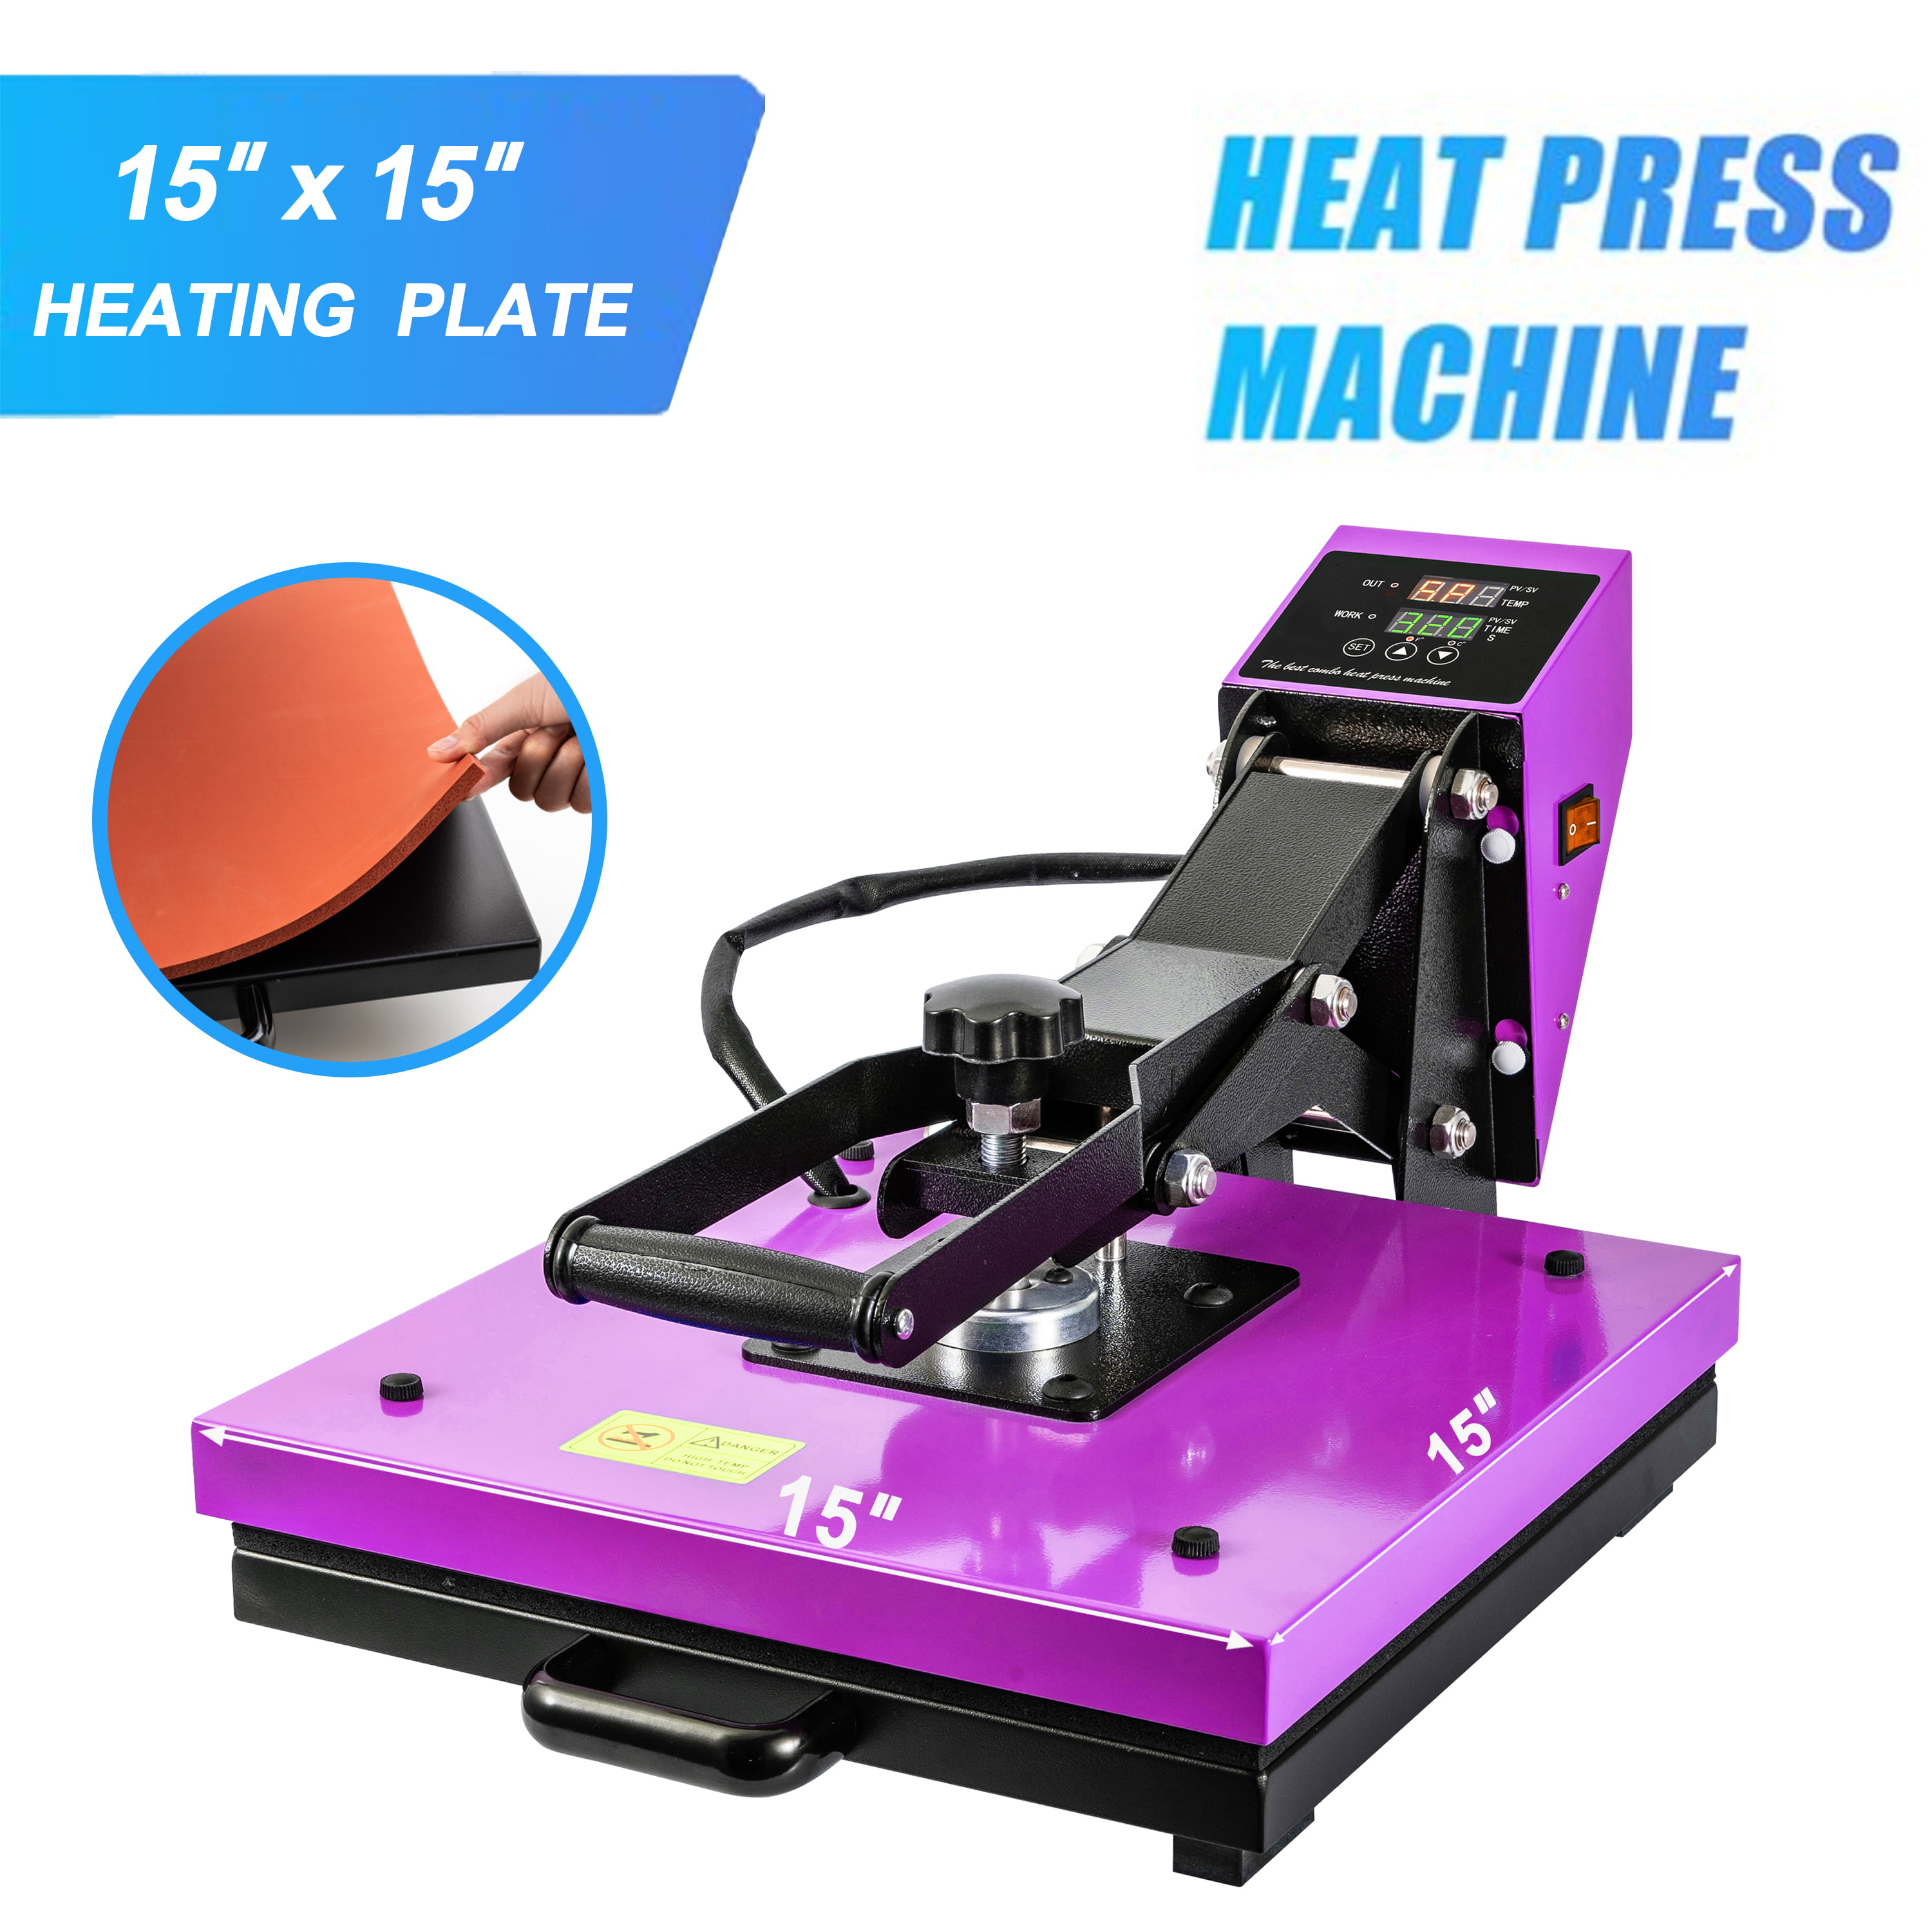 Aukfa 15x15 Heat Press Machine for T Shirts - Digital LED Timer